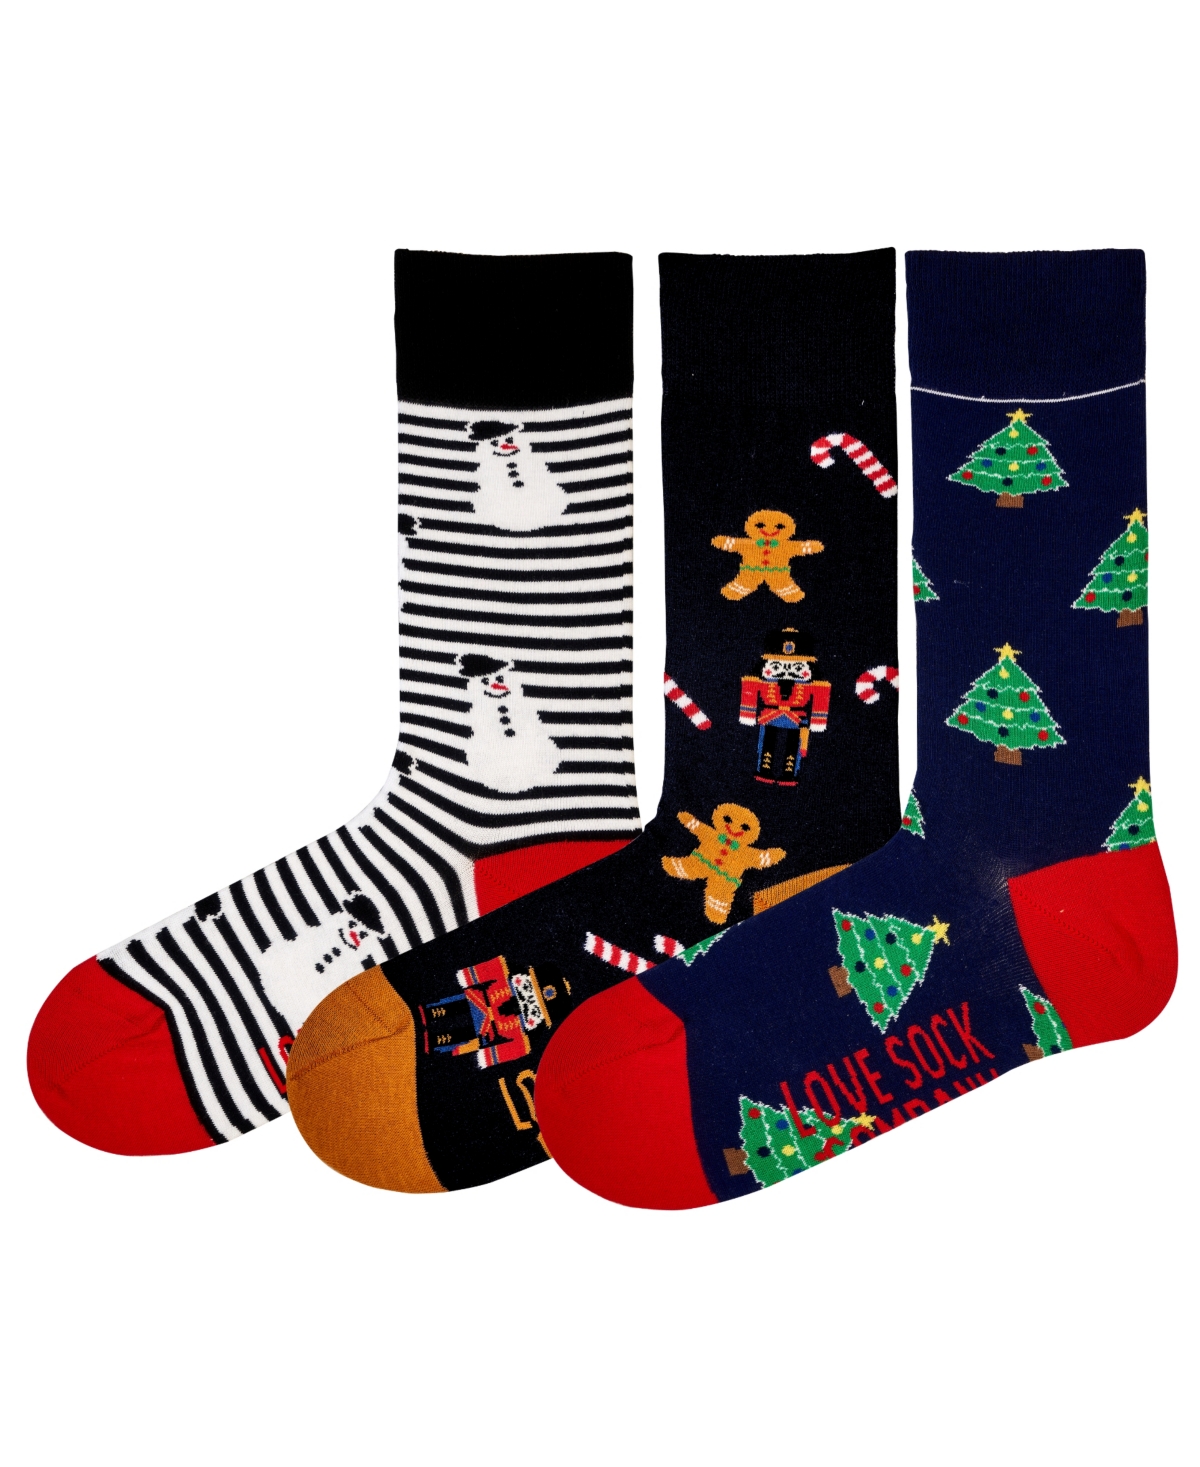 Men's Christmas Novelty Luxury Unisex Crew Socks Bundle Fun Colorful Socks, Pack of 3 - Multi Color